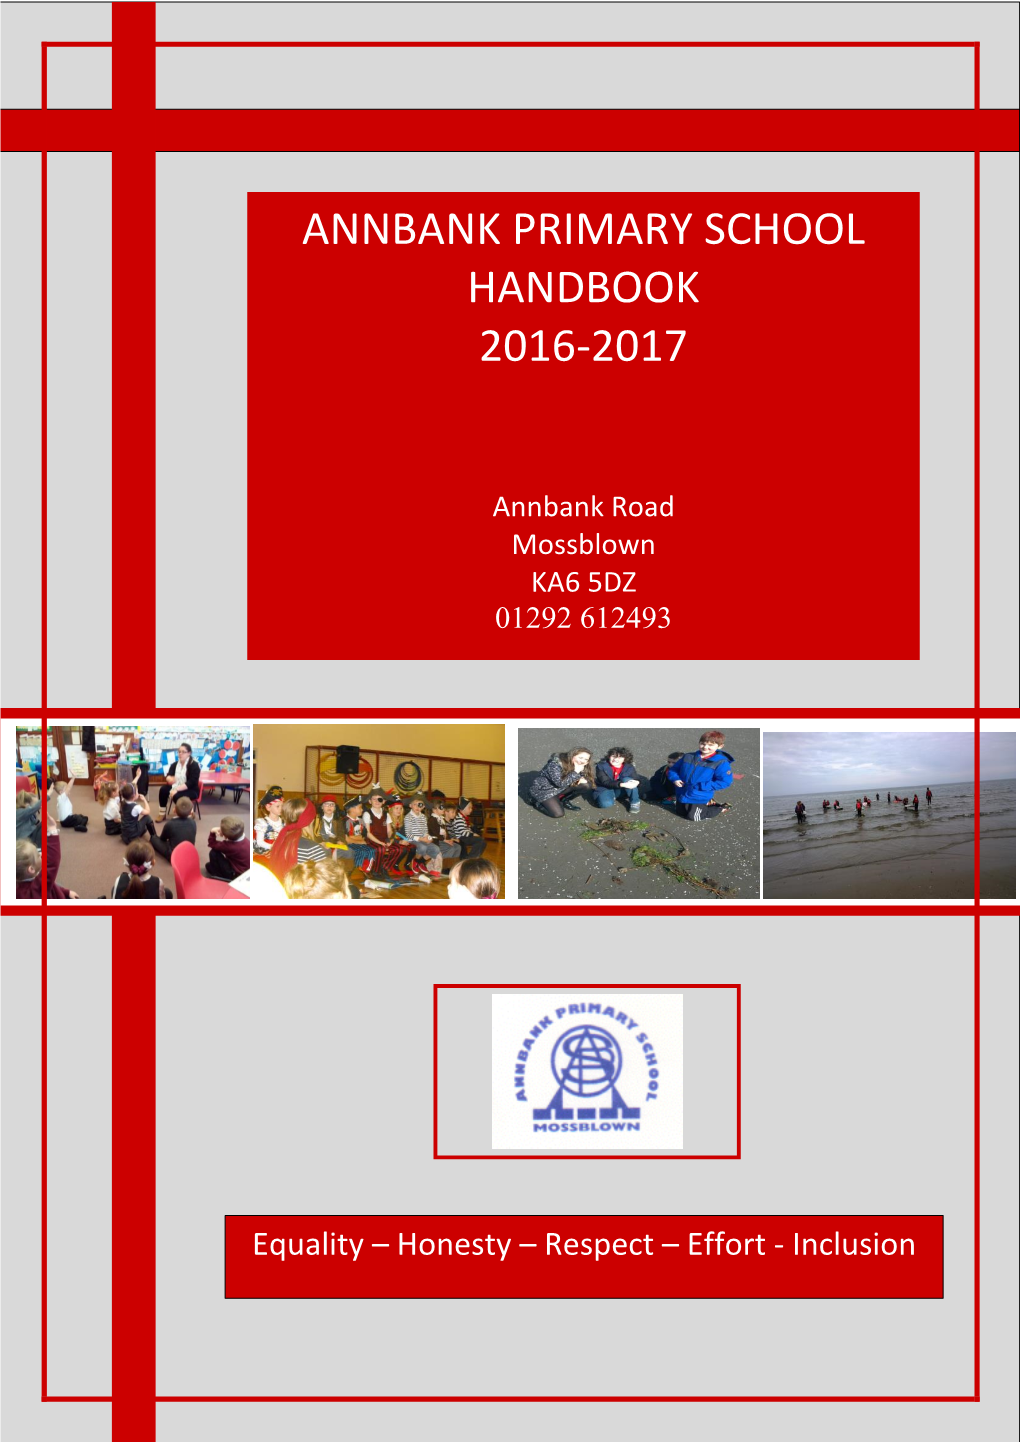 Annbank Primary School Handbook 2016-2017